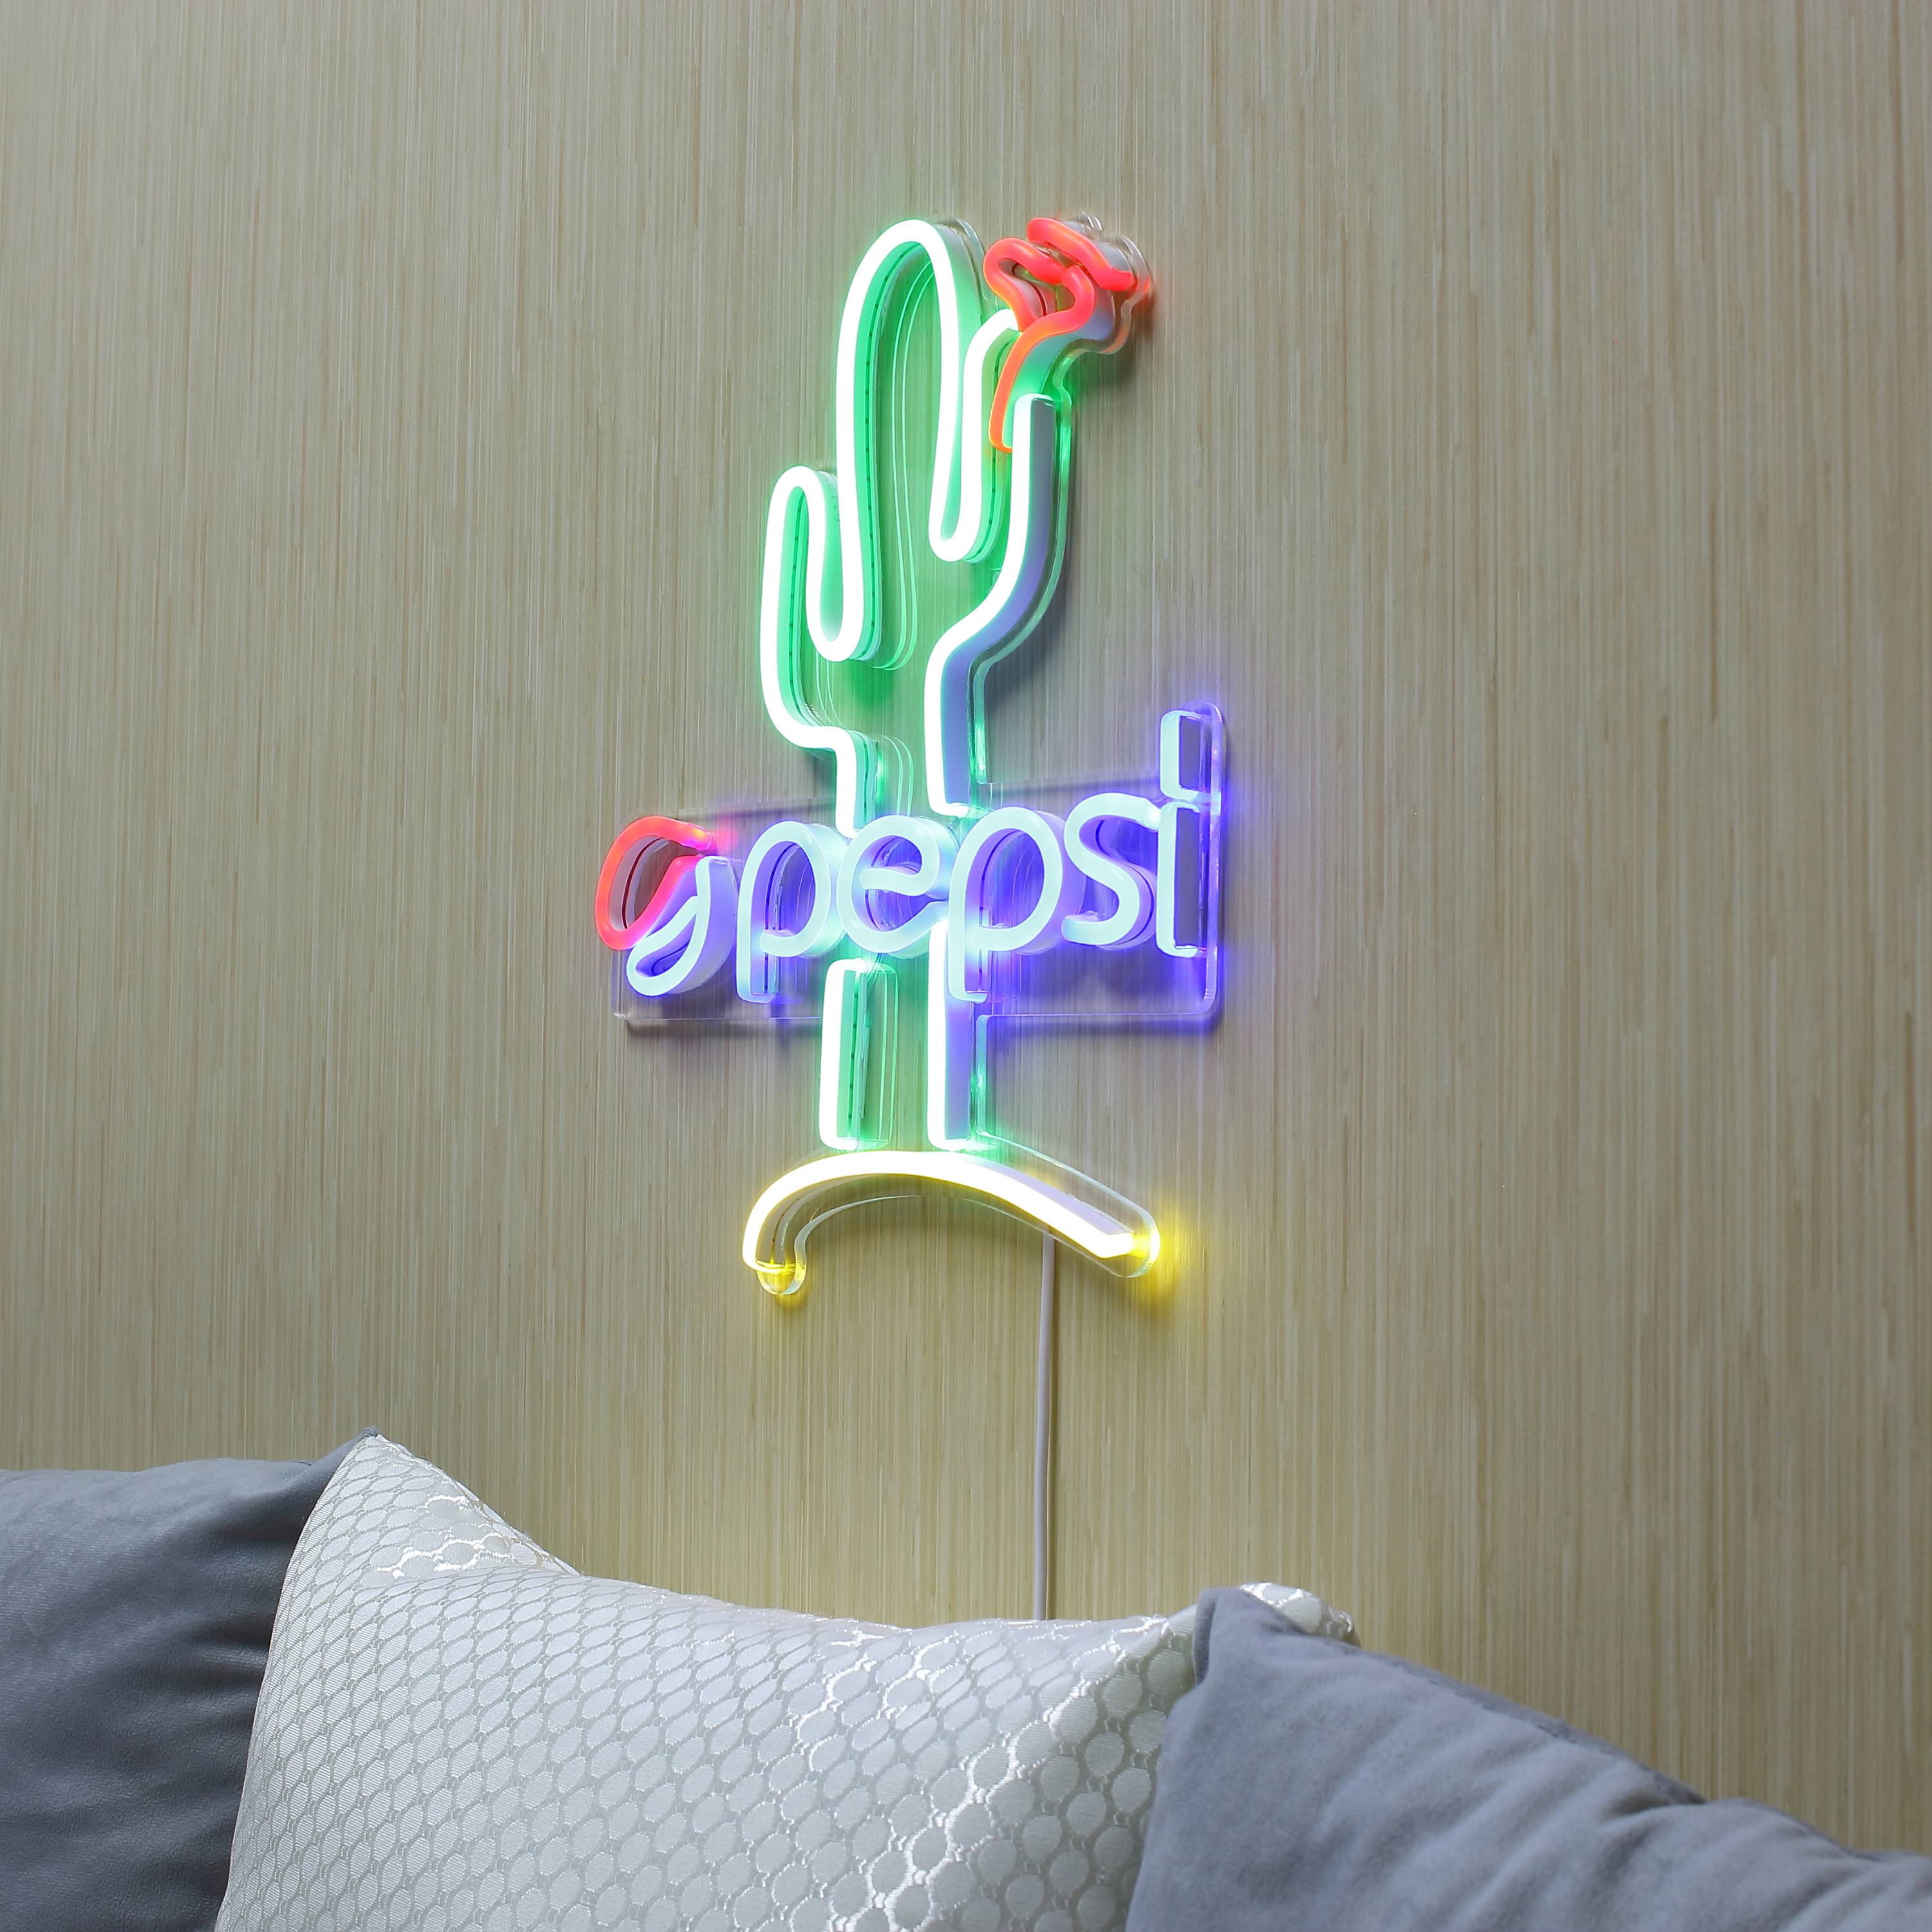 Pepsi with Cactus Large Flex Neon LED Sign